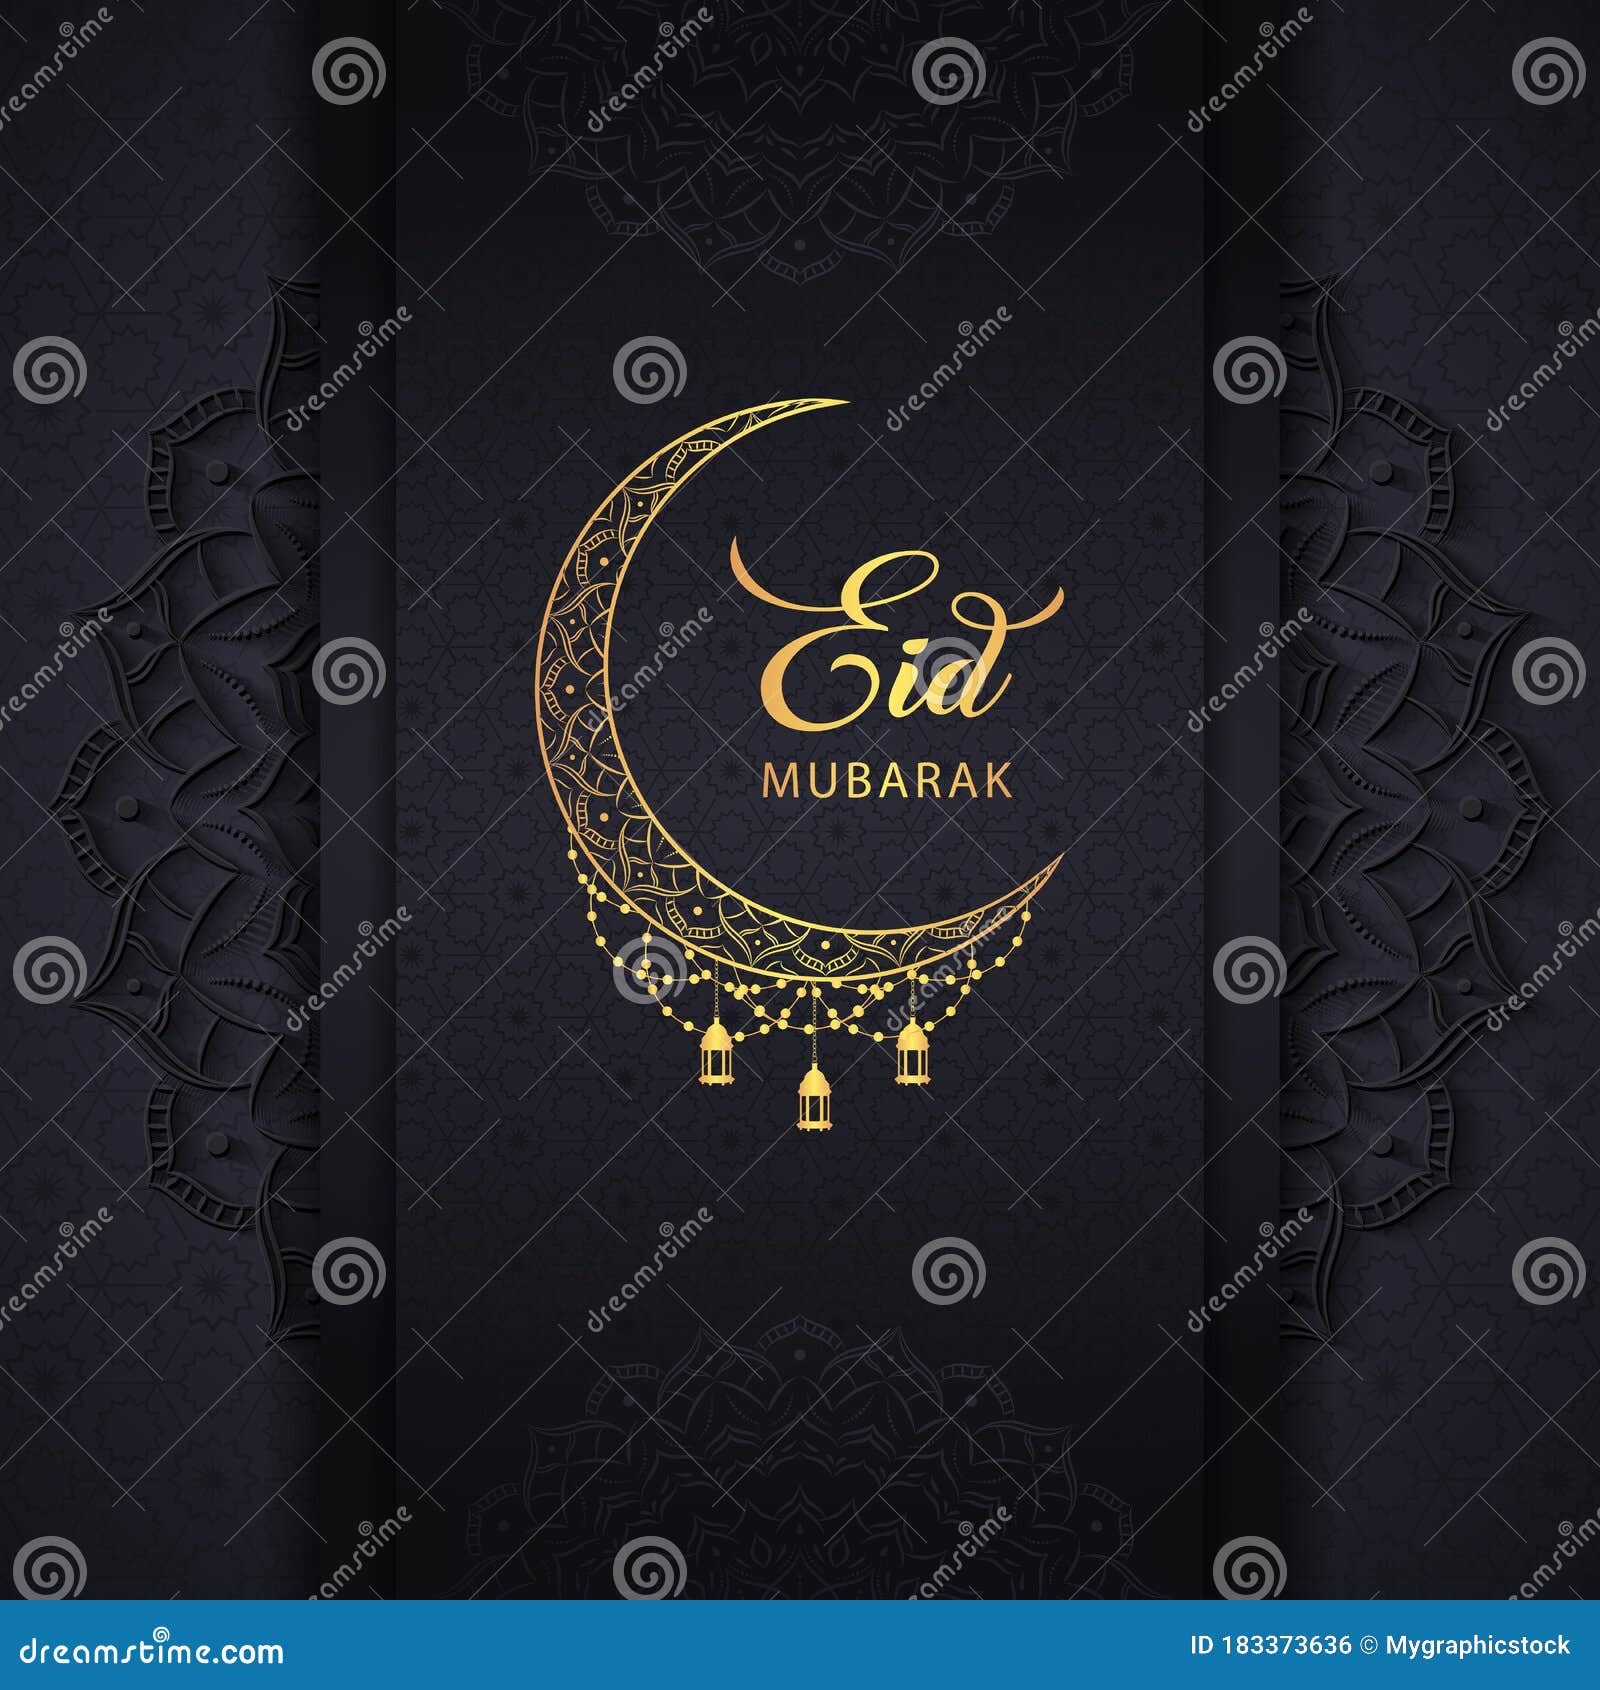 Eid Mubarak Black Background Greeting Design with Beautiful Mandala Art,  Golden Moon, Islamic Lantern and Arabic Pattern Stock Vector - Illustration  of black, floral: 183373636